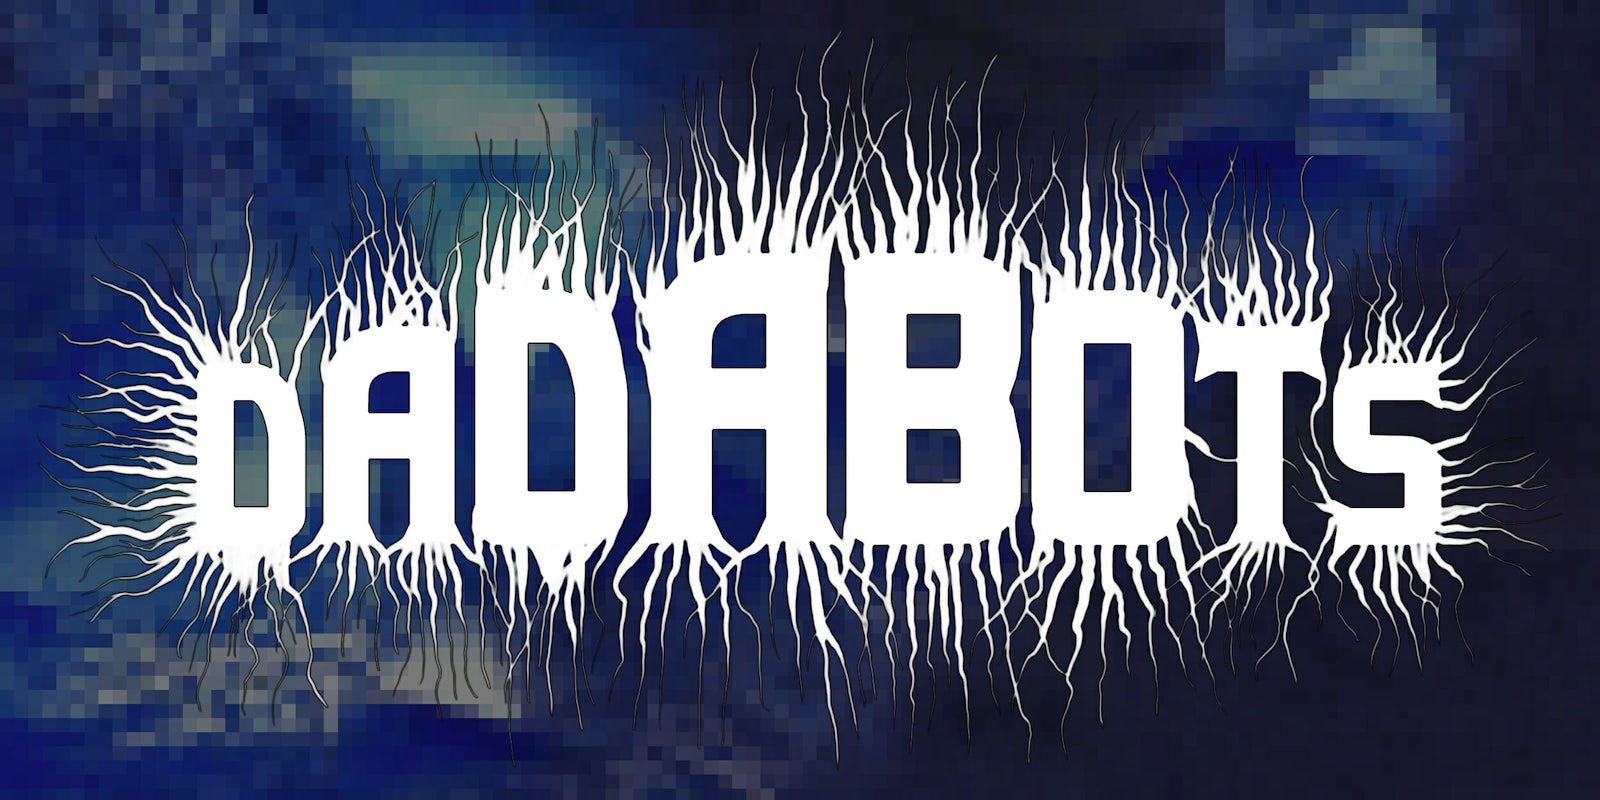 Black metal AI band DADABOTS